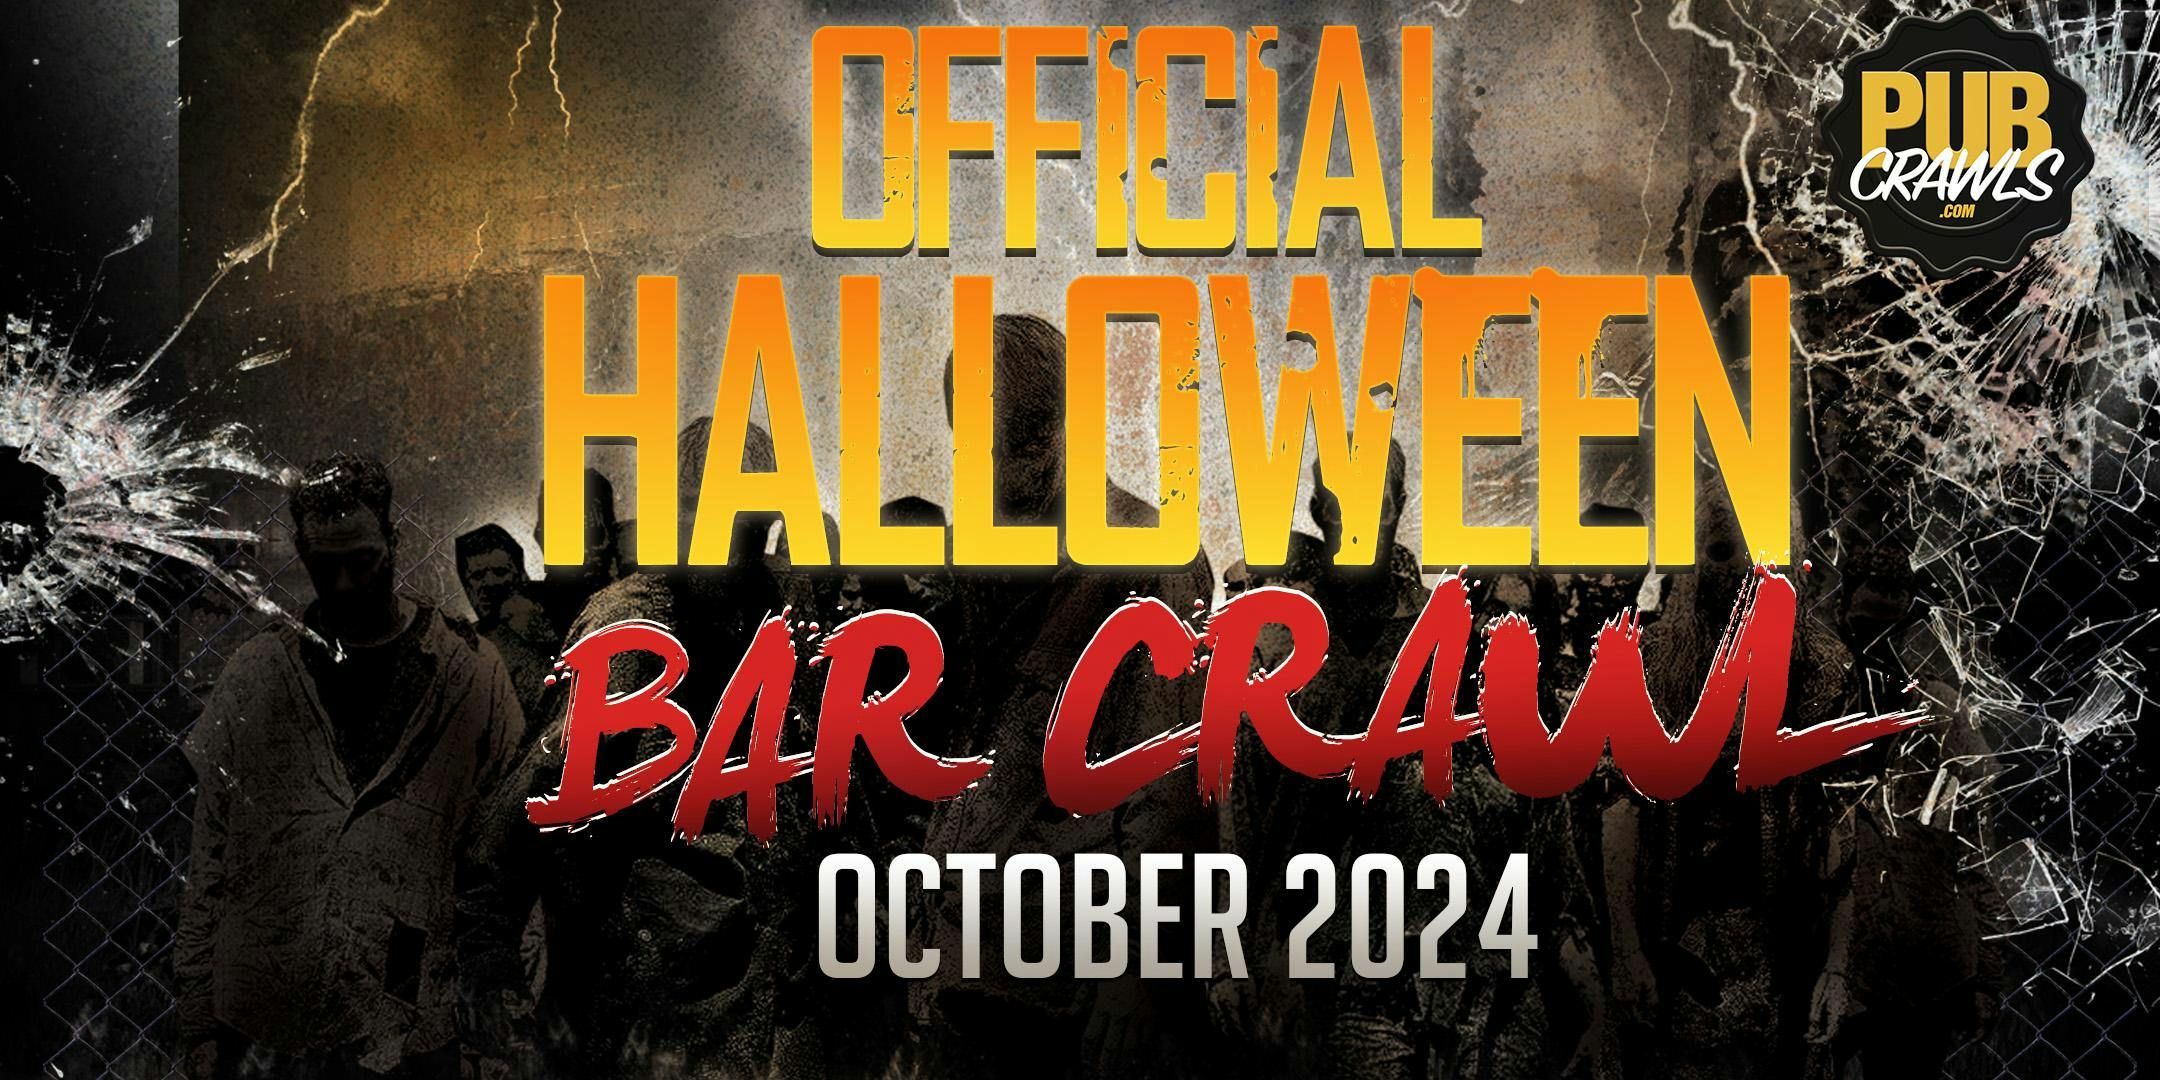 Green Bay Official Halloween Bar Crawl